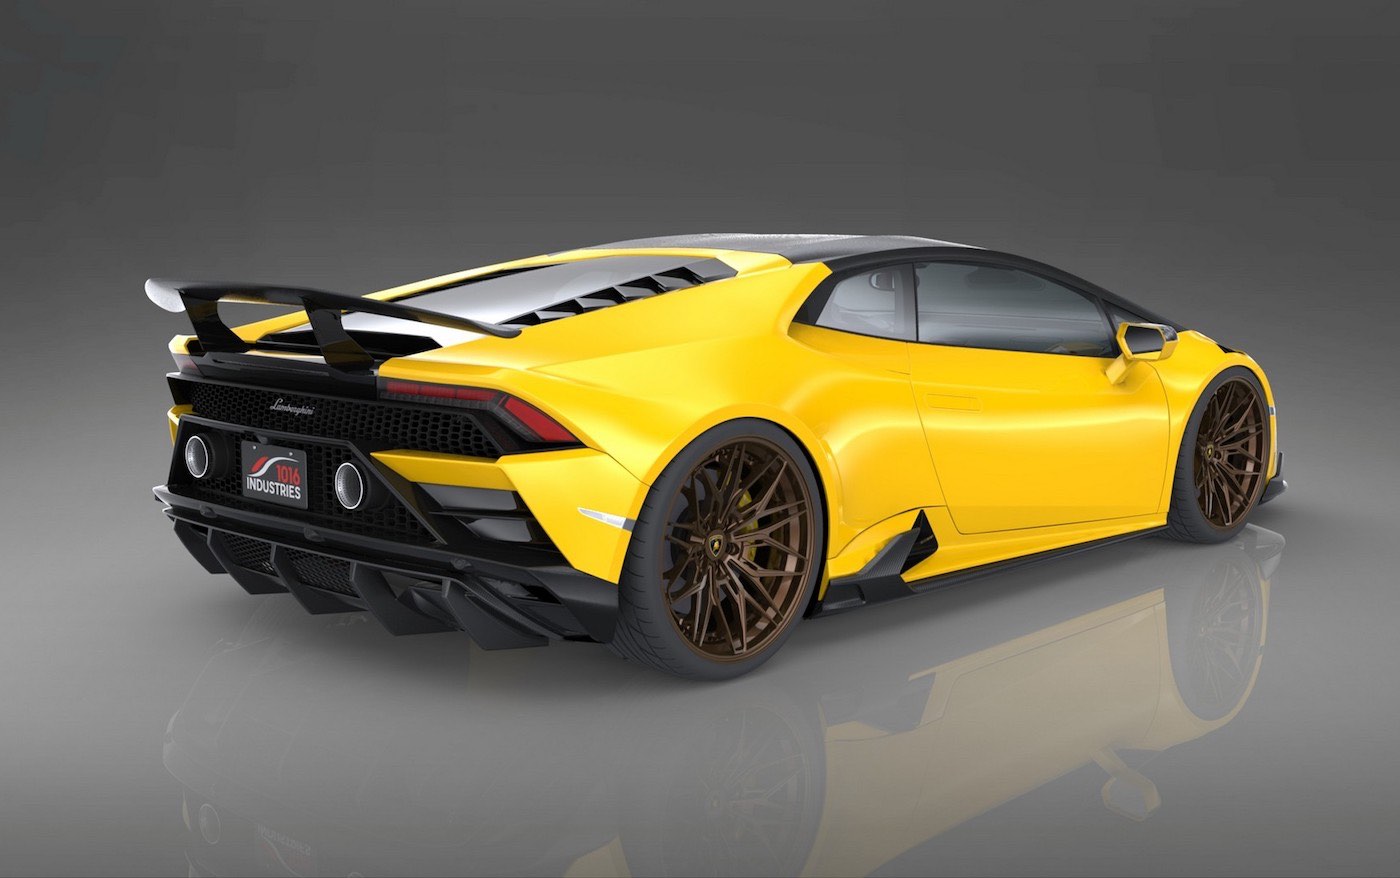 1016 Industries crean el primer Lamborghini Huracán Evo 100% de fibra de carbono del mundo